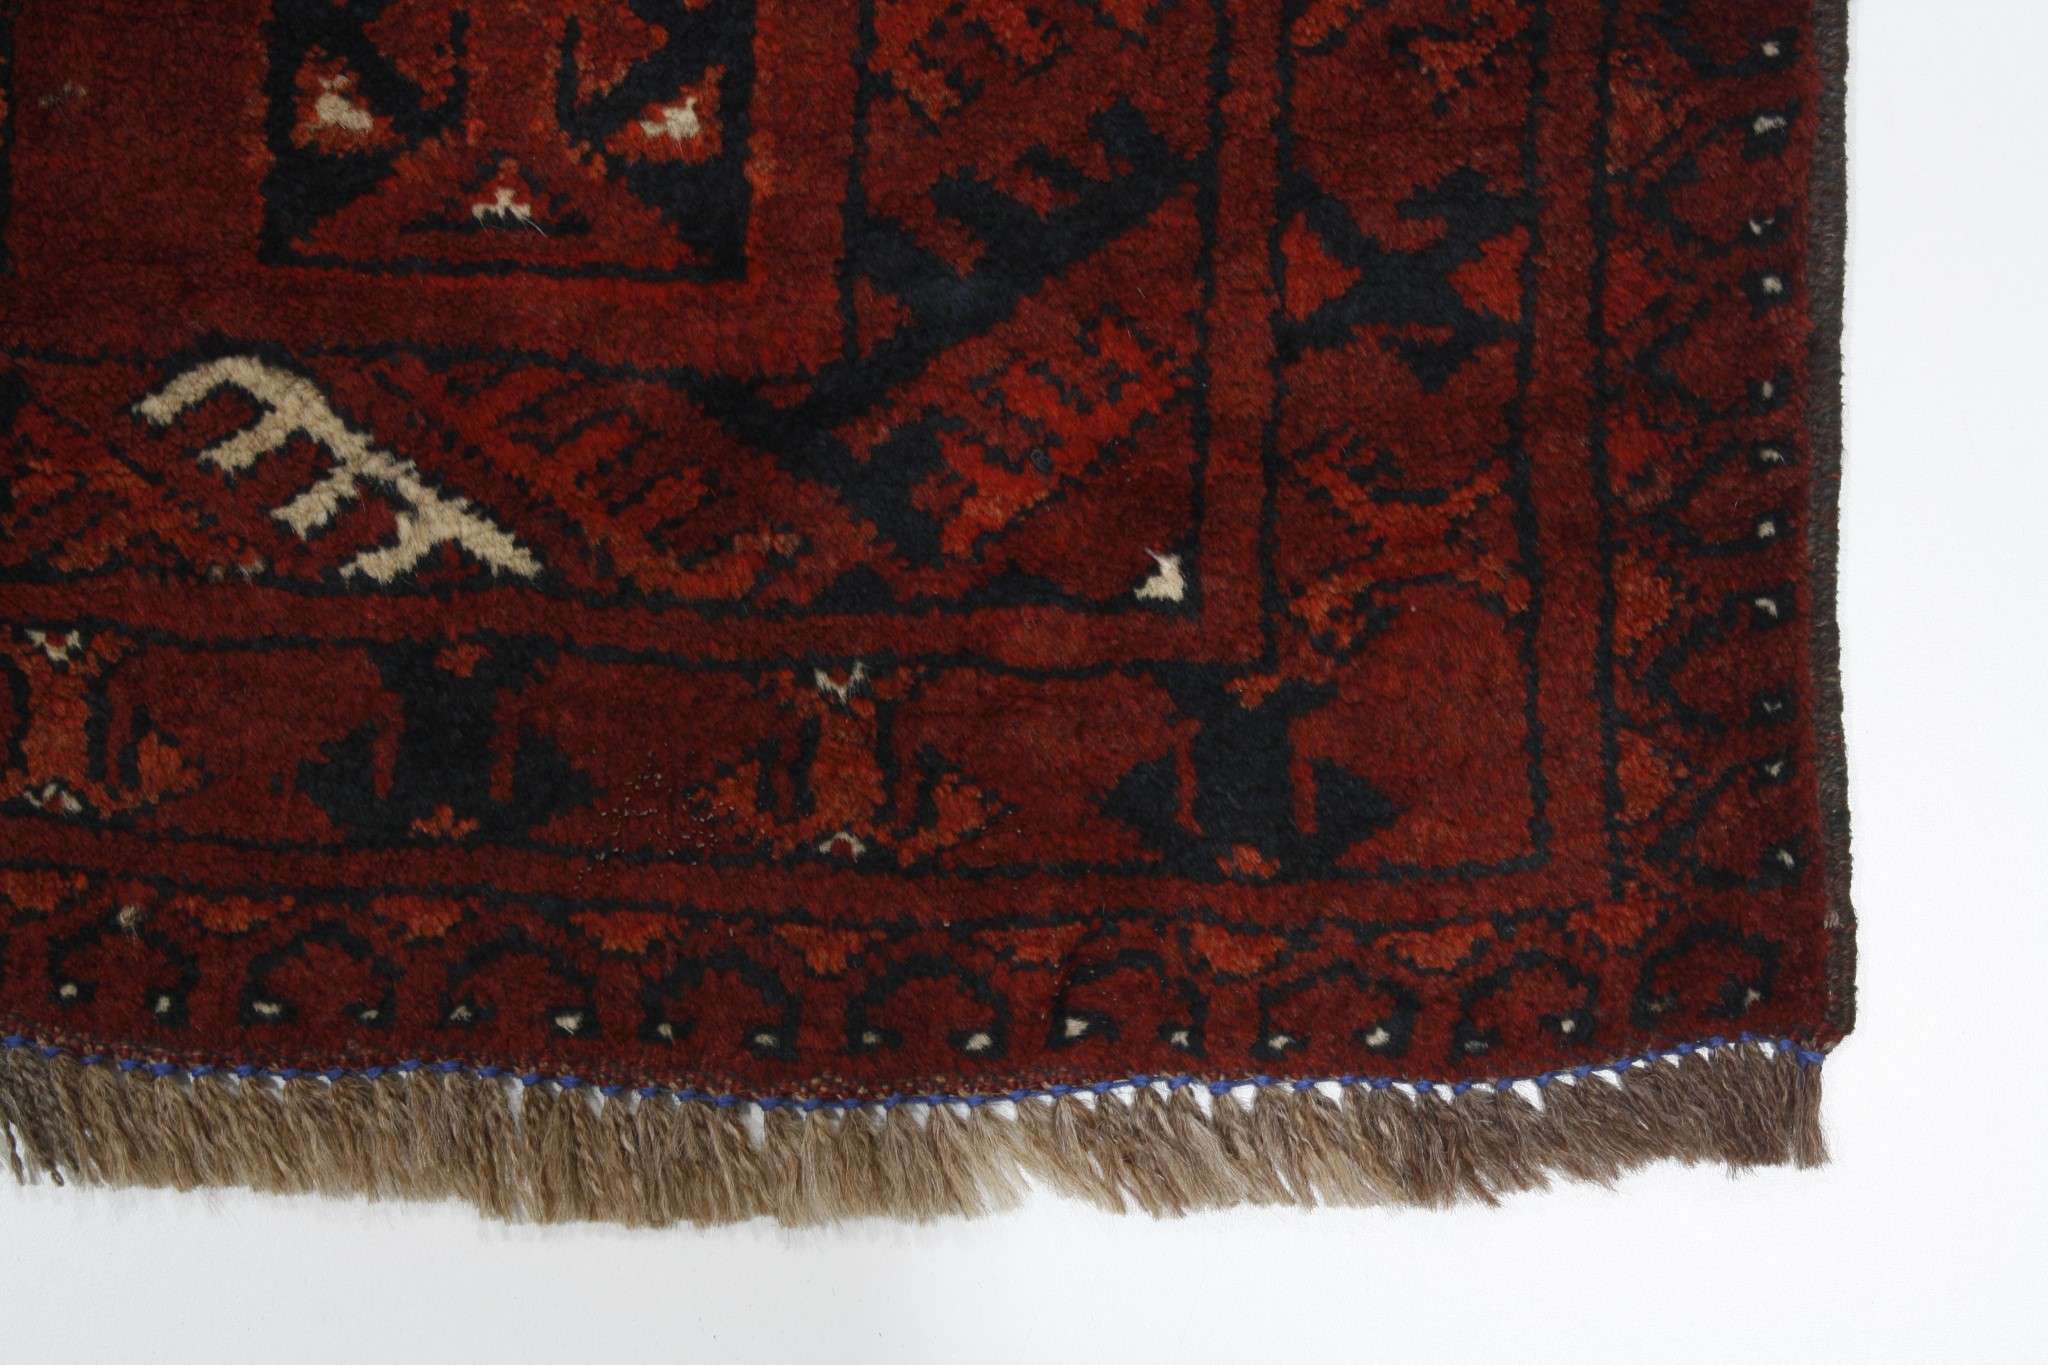 Turkmen Semi-antique